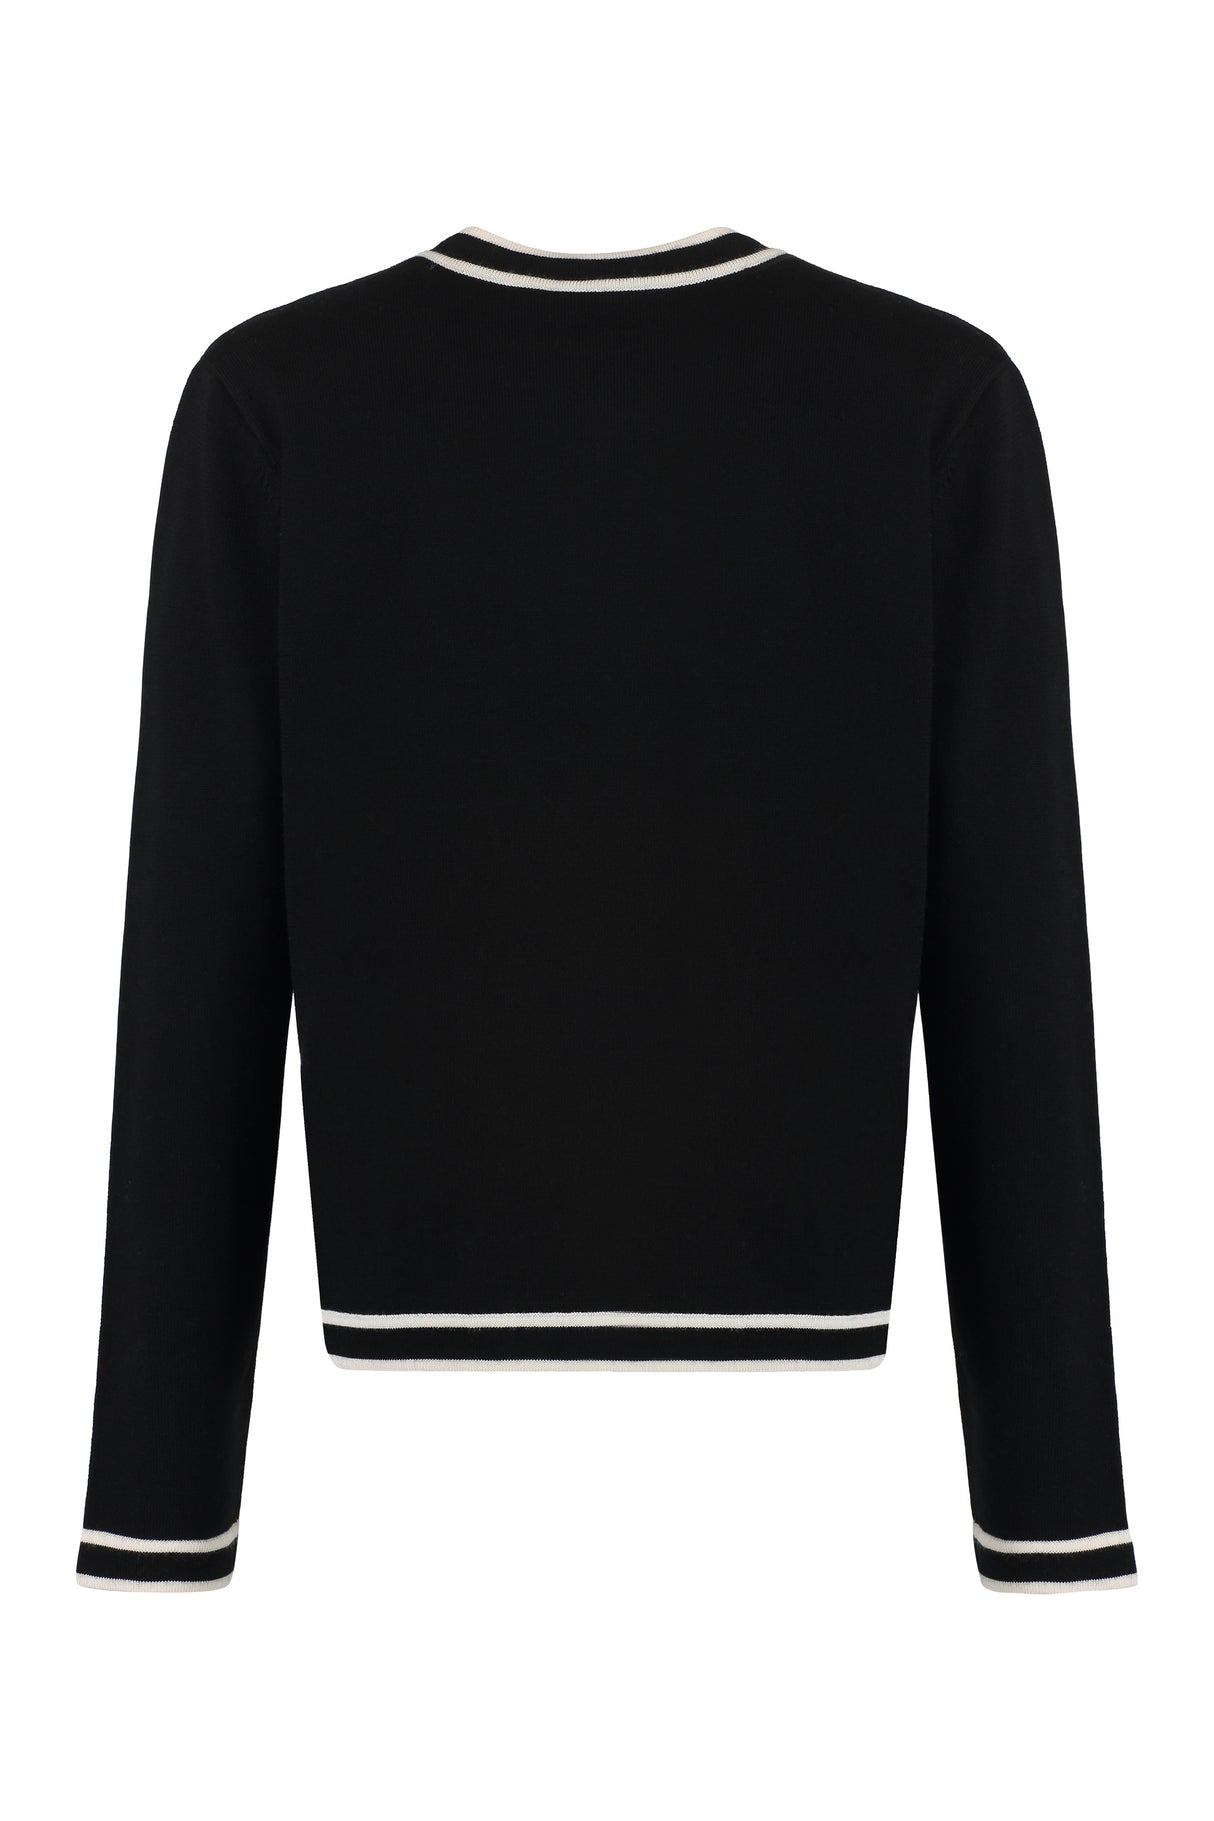 Luxurious Merino Wool Cardigan for Women in Black